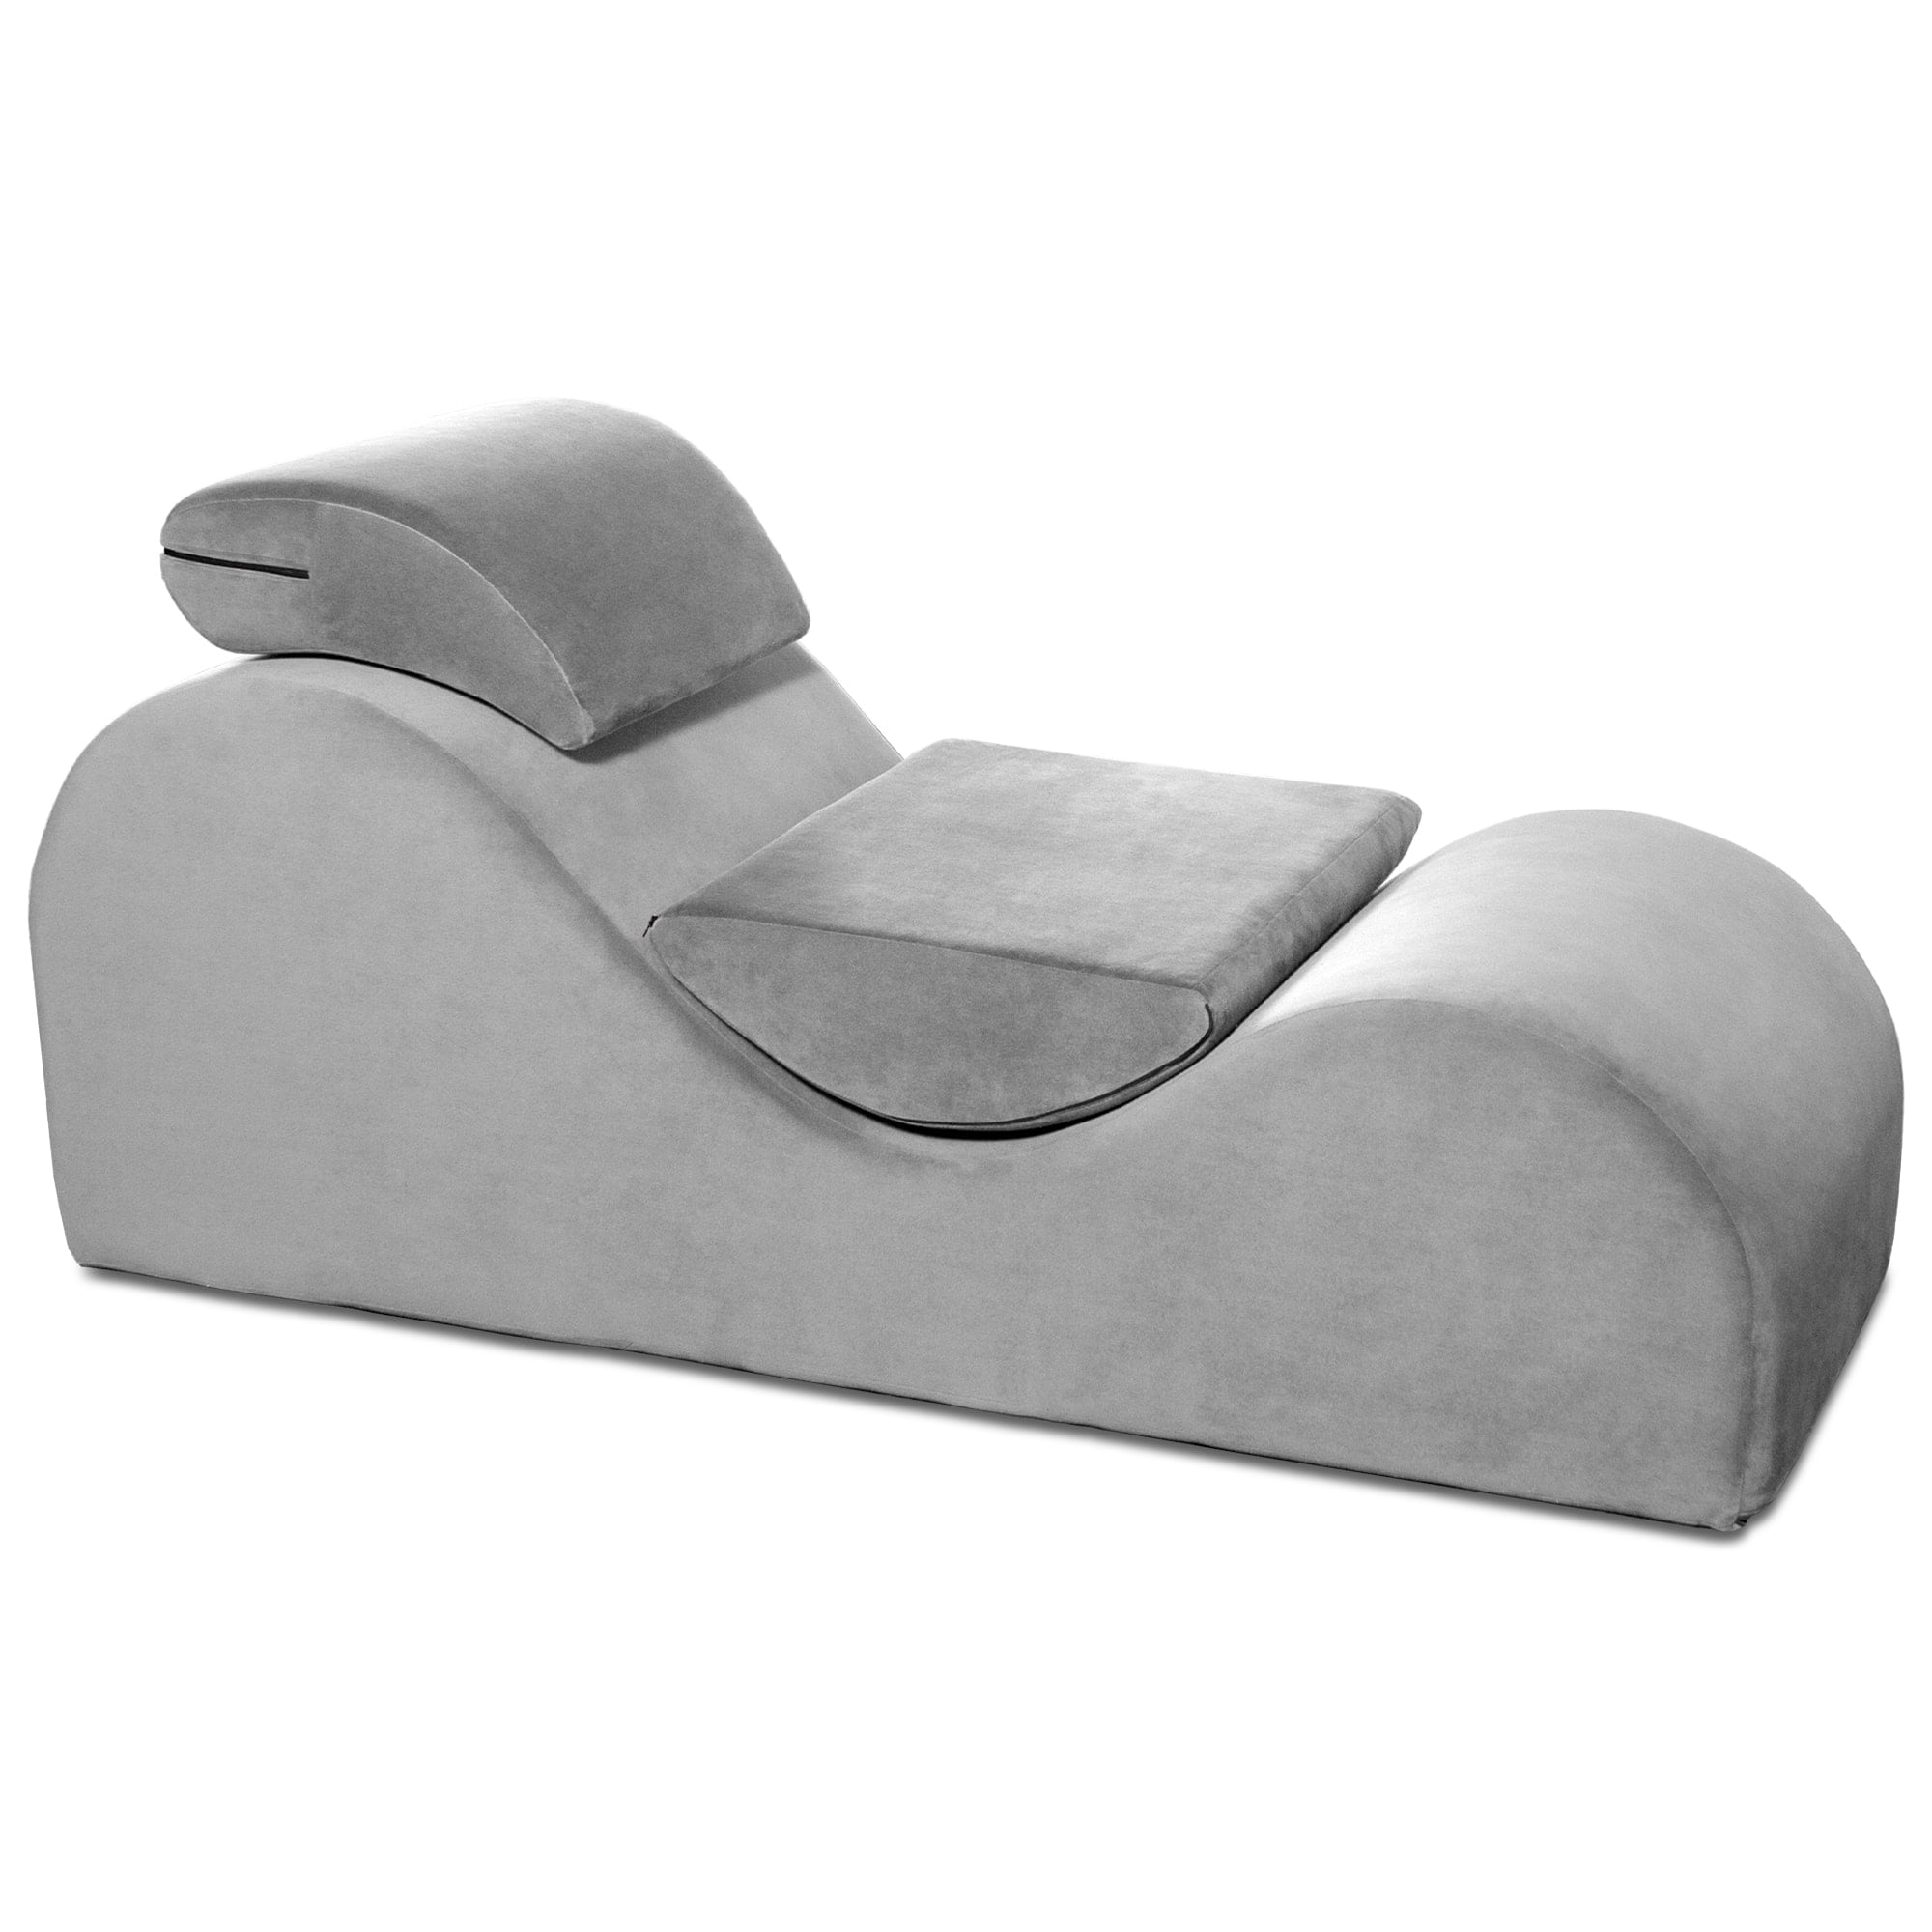 Avana Luvu Lounger - Elegant Chaise Lounge Chair for Yoga